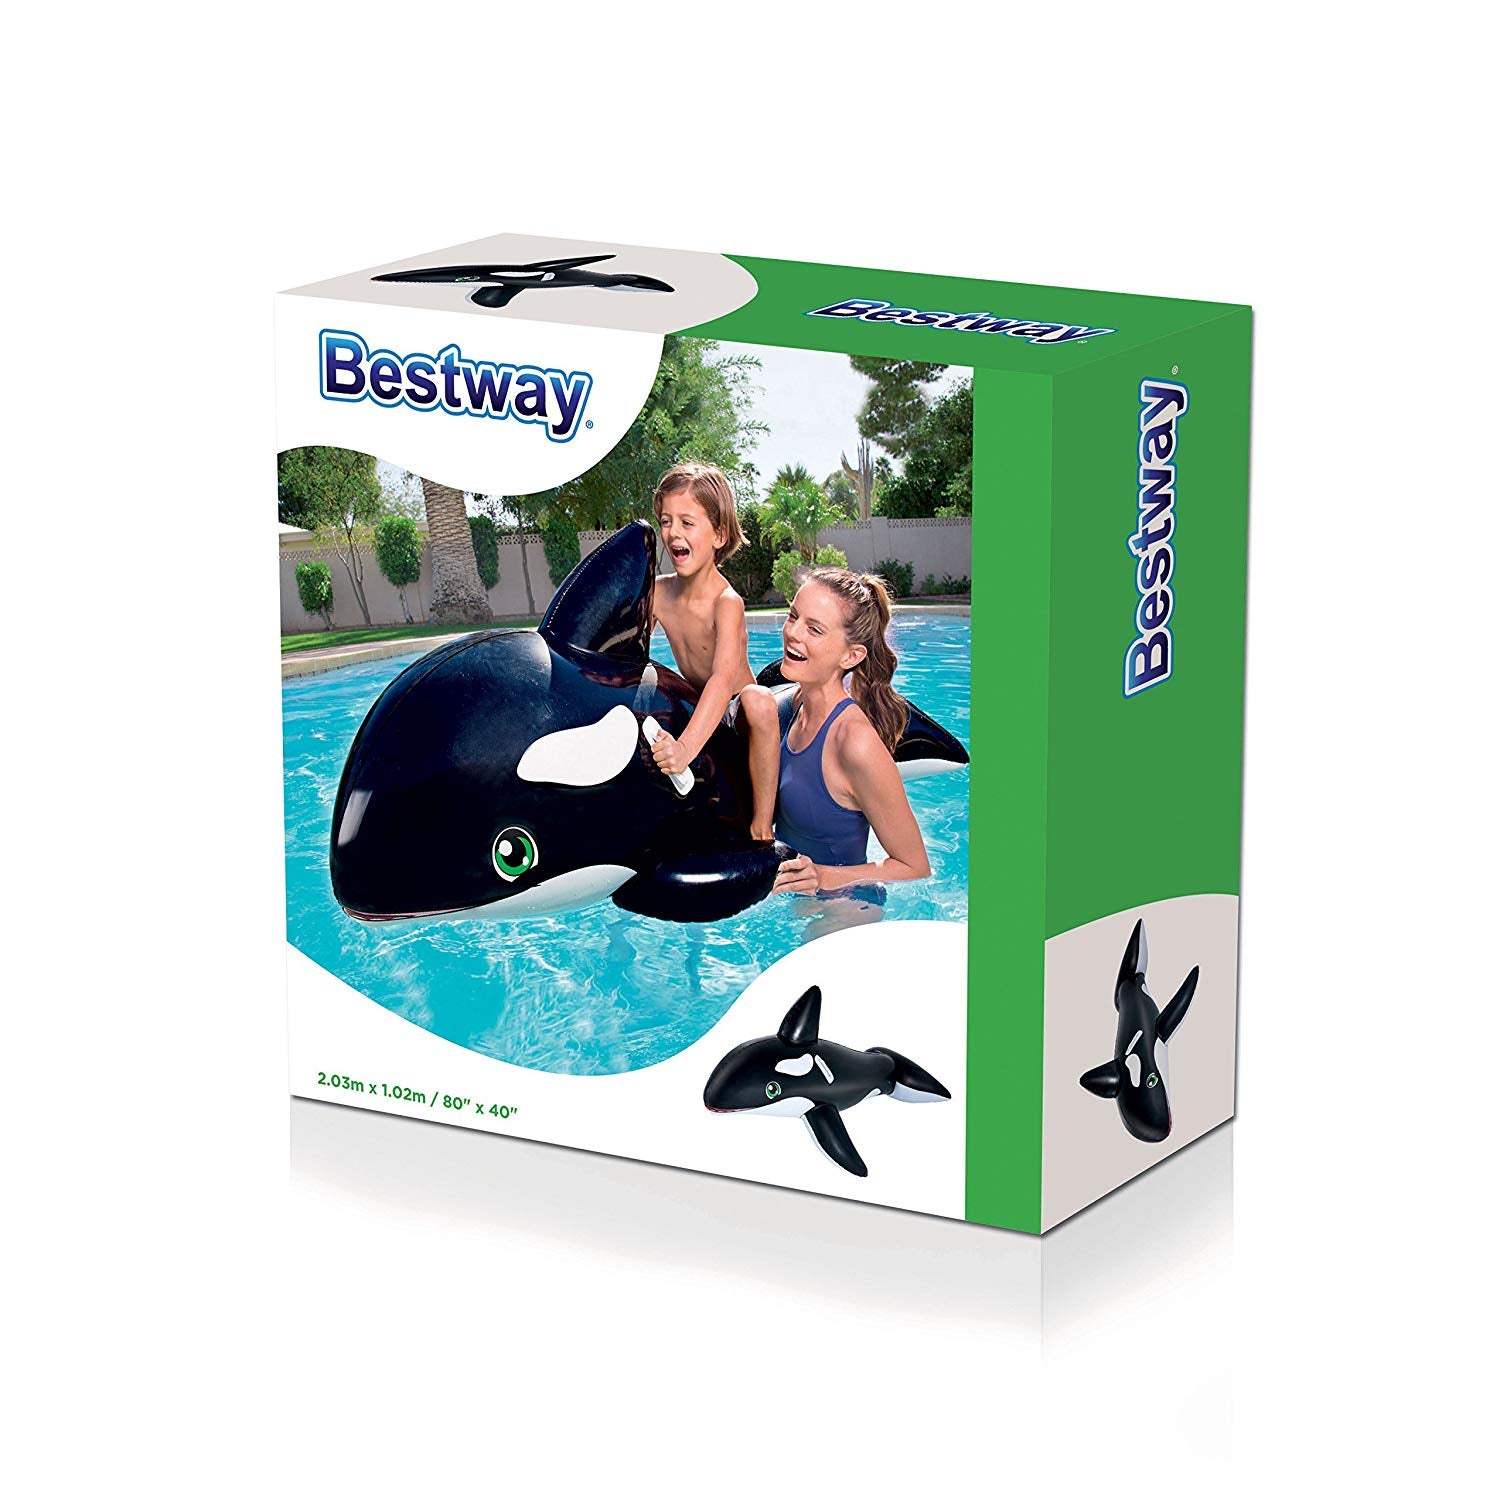 Bestway - Jumbo Whale Rider (80" x 40"/2.03m x 1.02m)